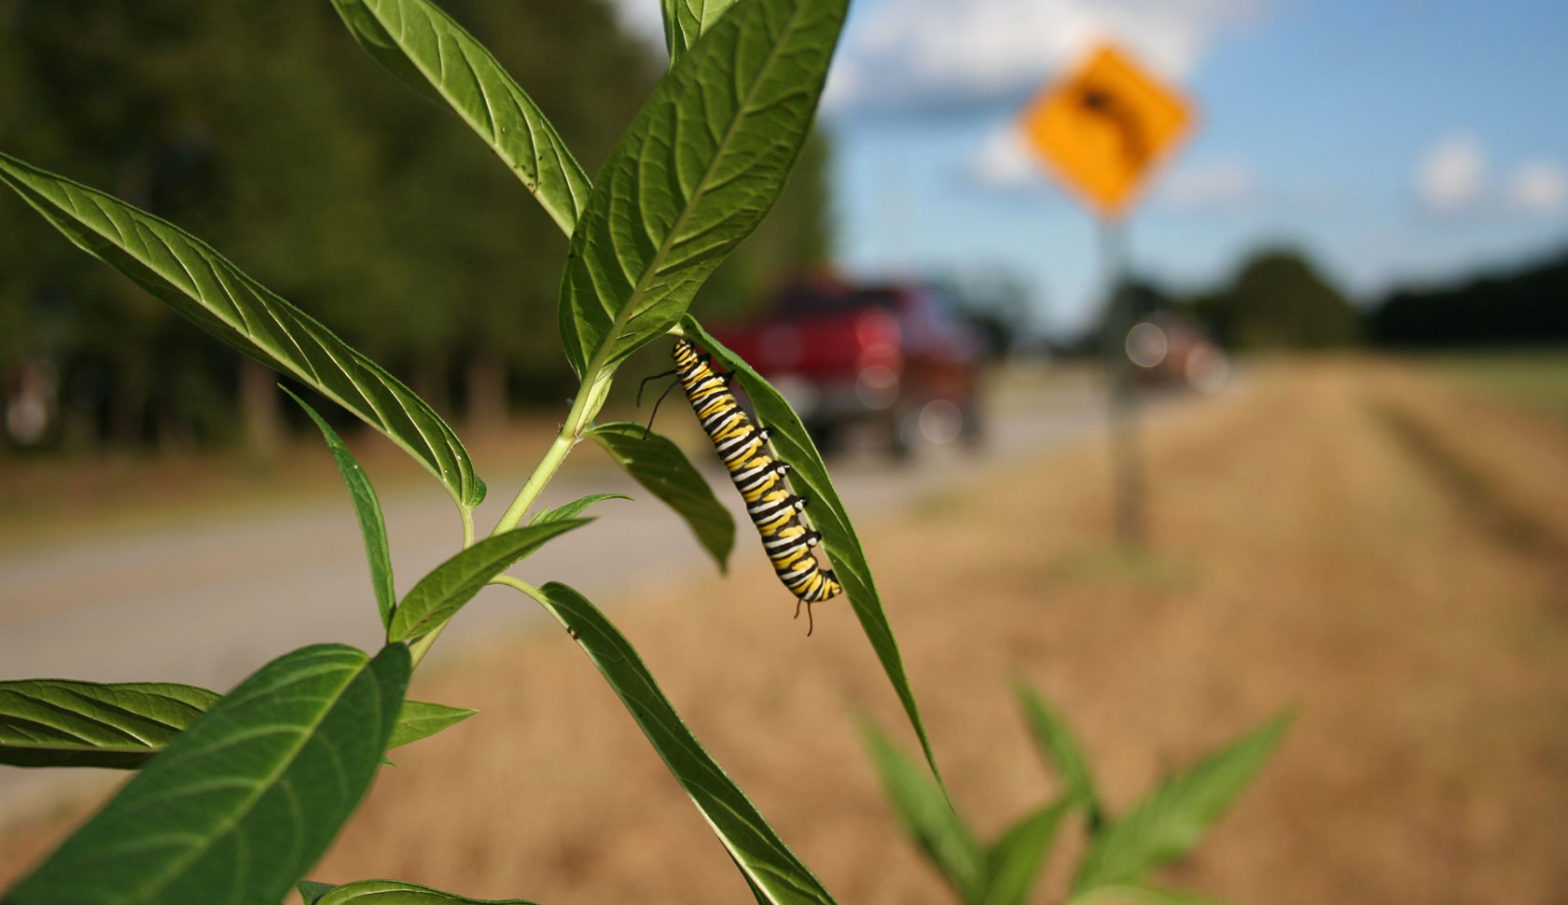 caterpillar on leaf by roadside